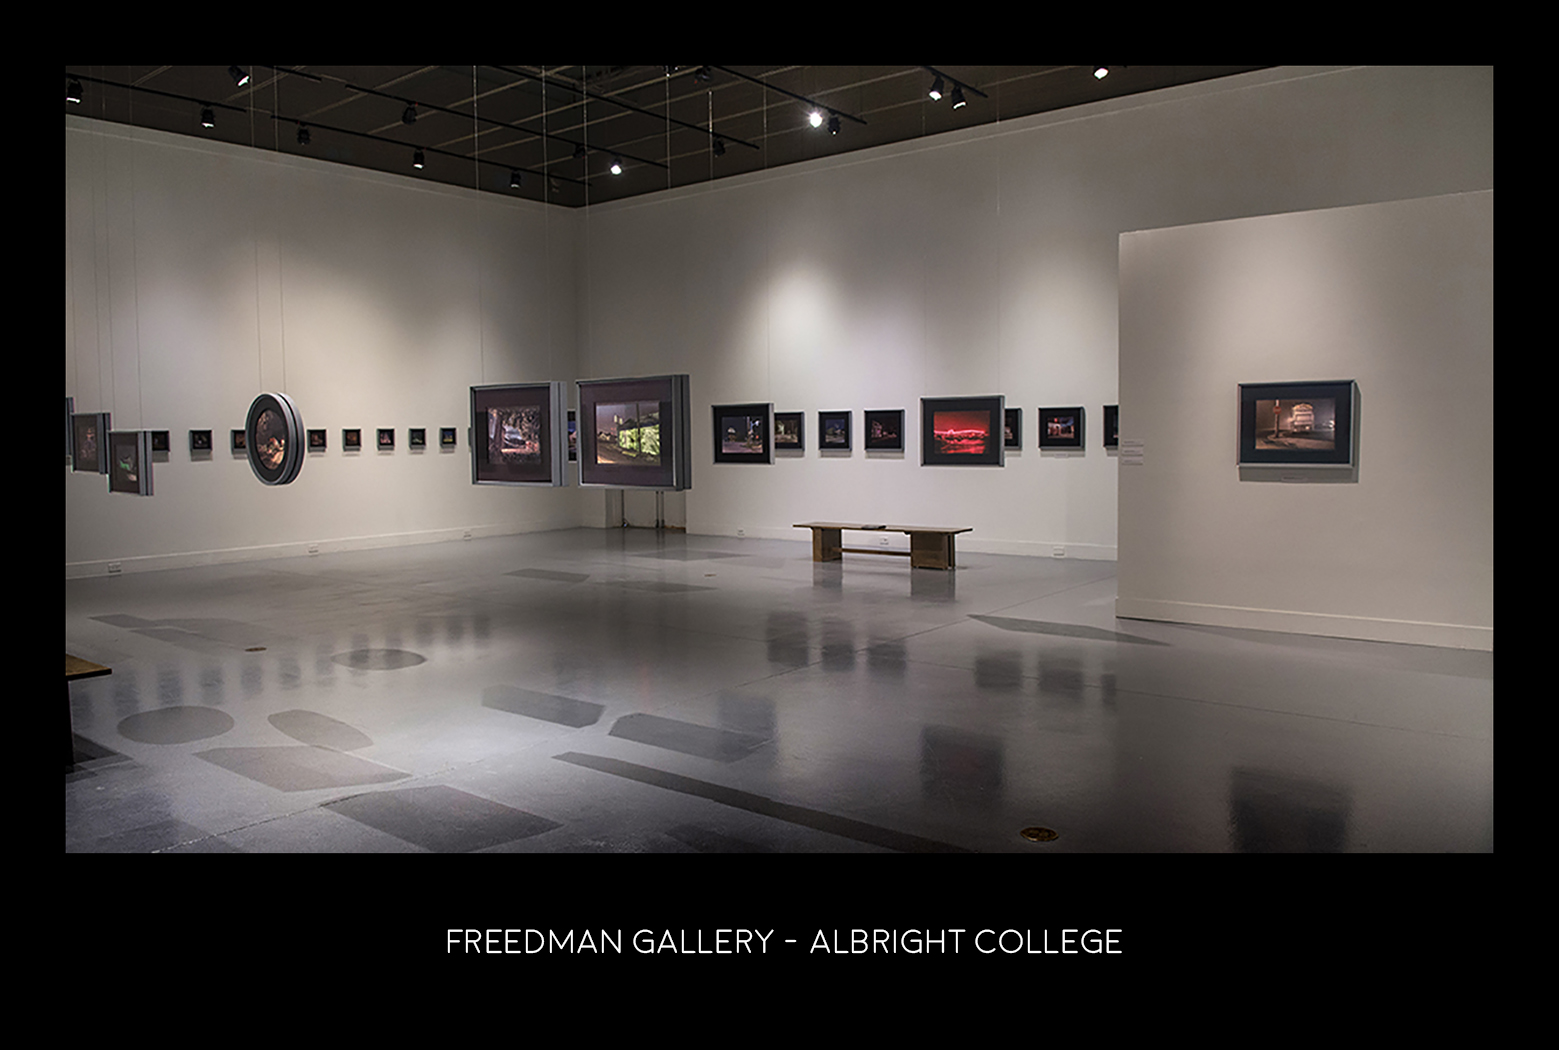 Freedman Gallery